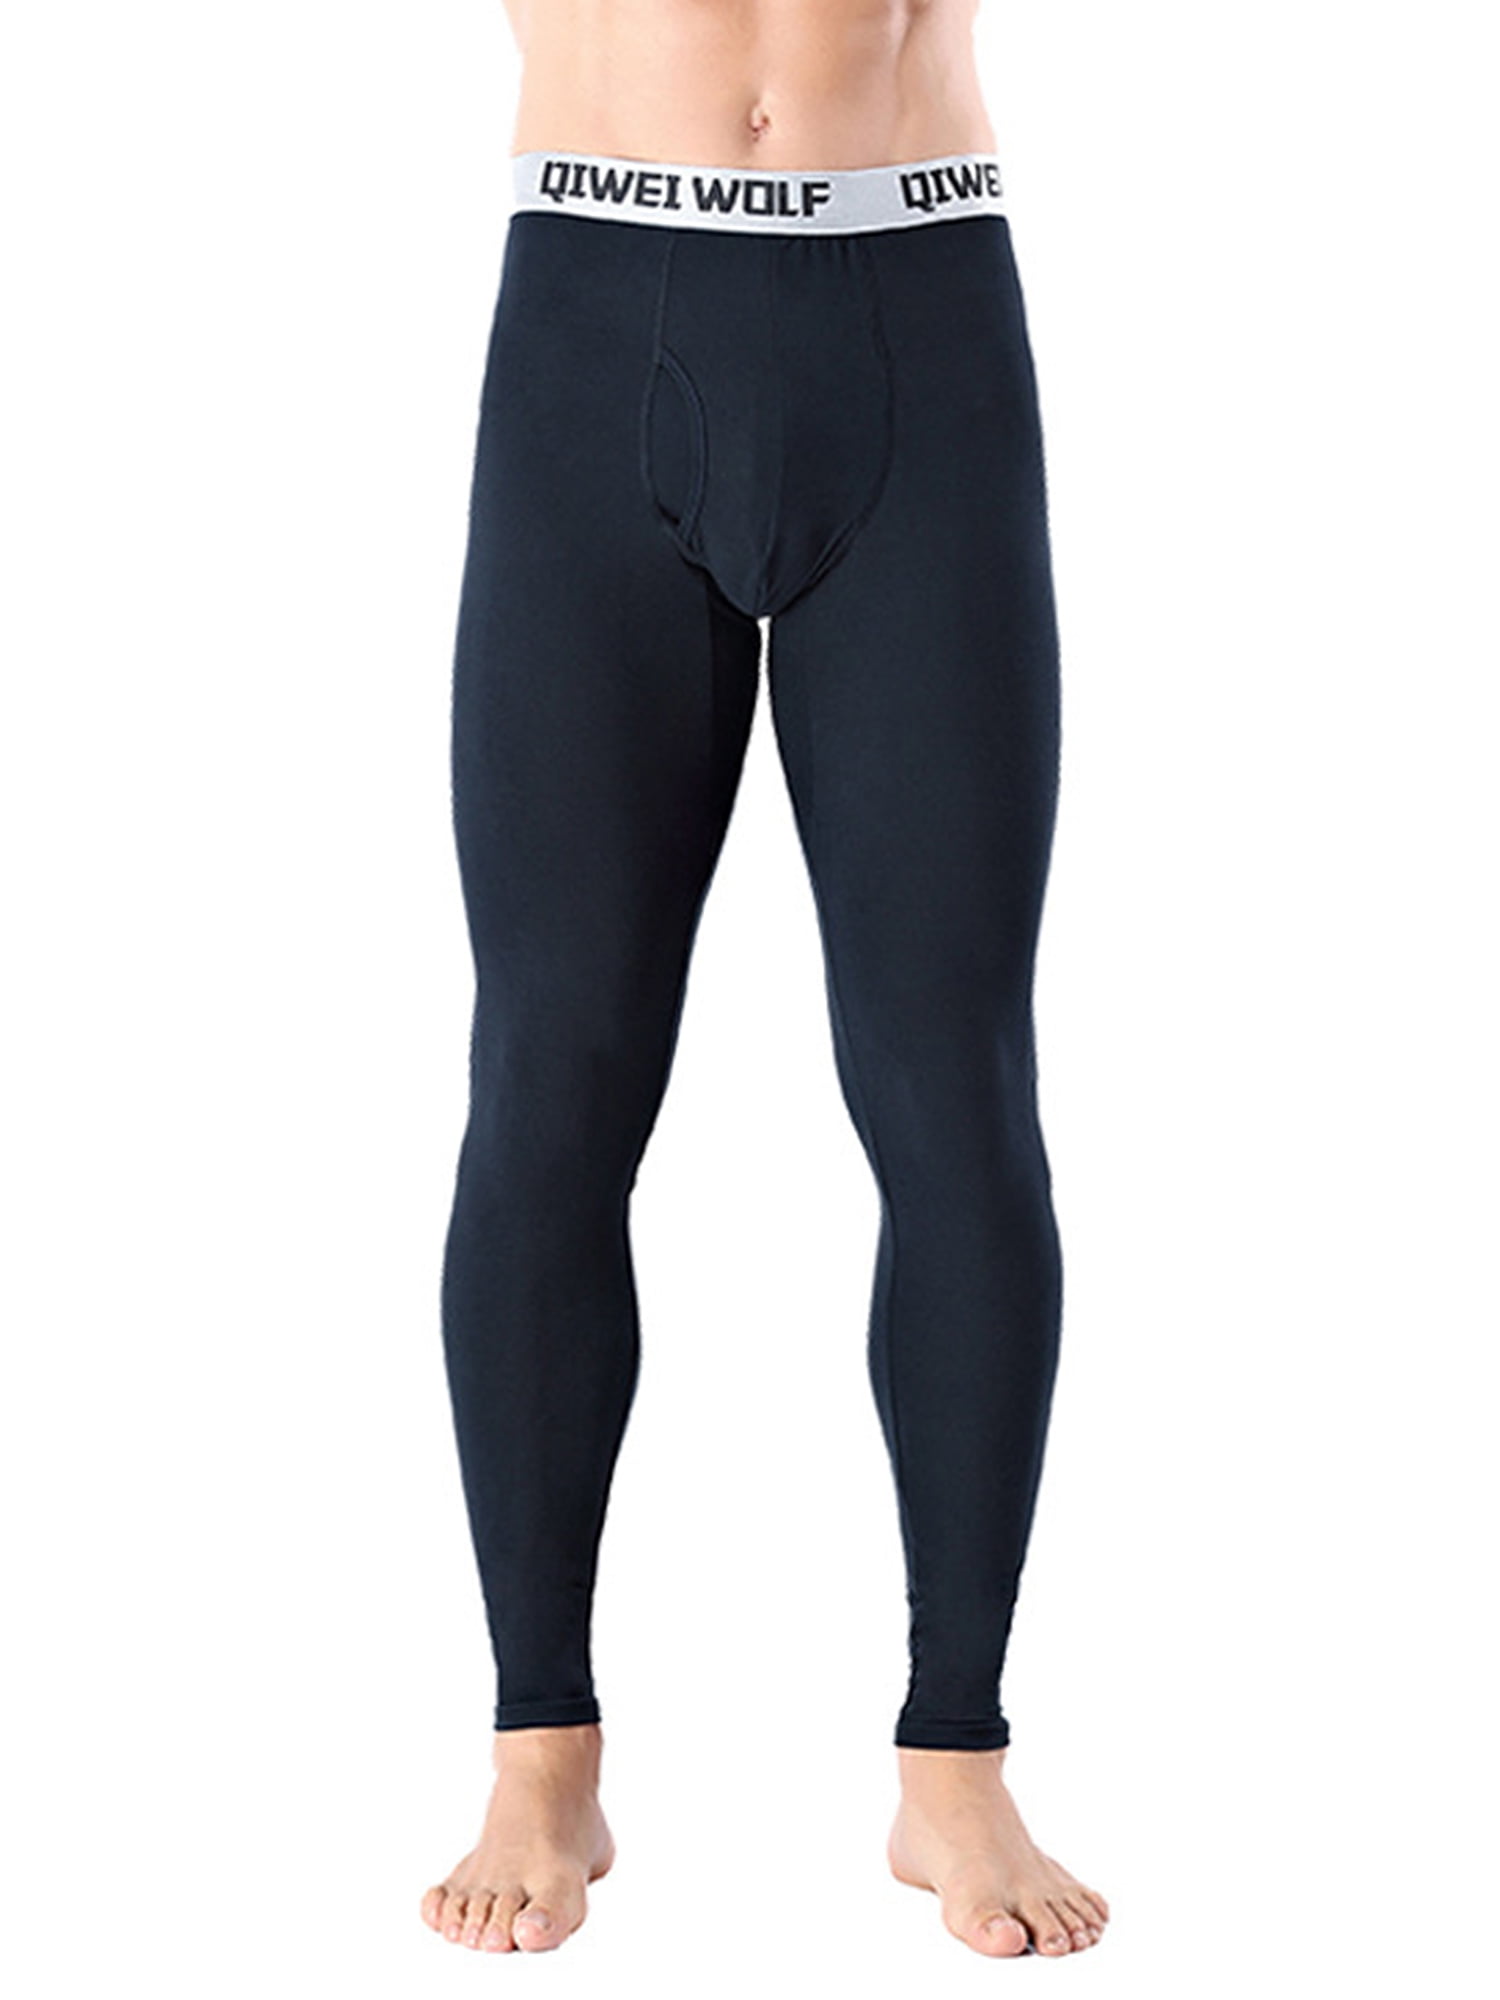 Capreze Men Leggings Elastic Waist Thermal Pant Winter Warm Long Johns  Extreme Cold Underwear Solid Color Bottoms Navy Blue XL